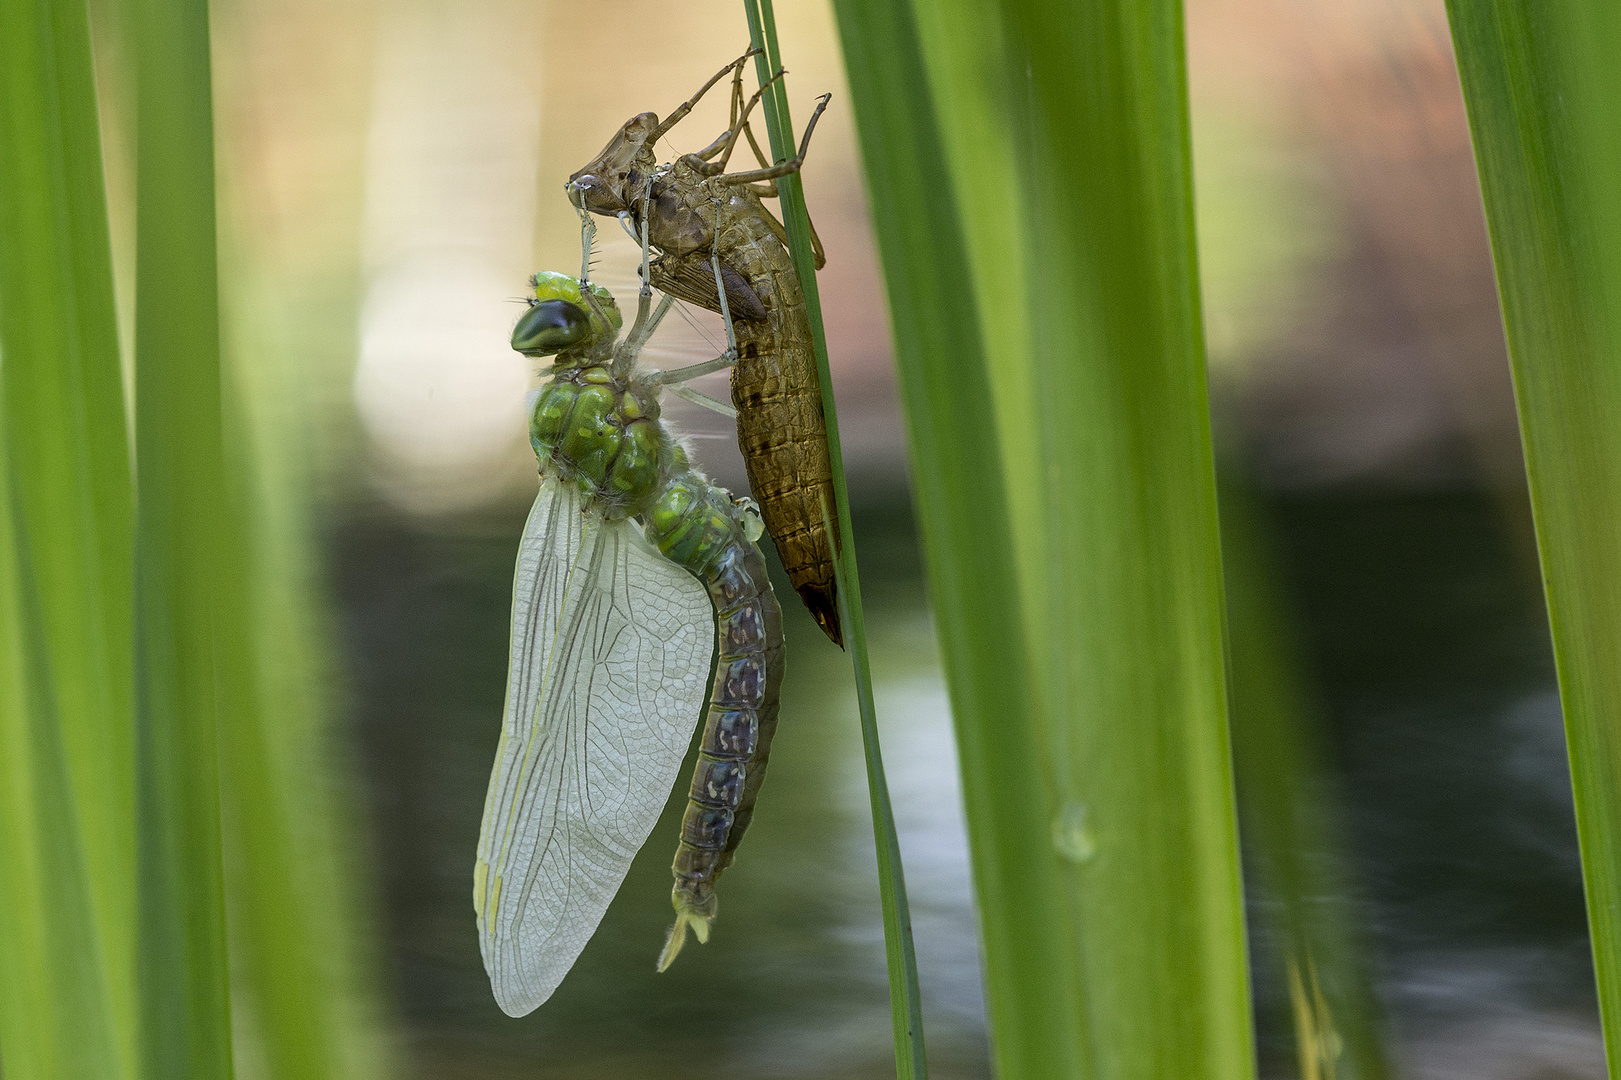 Heute Morgen am Teich - schlüpfende Libelle 3